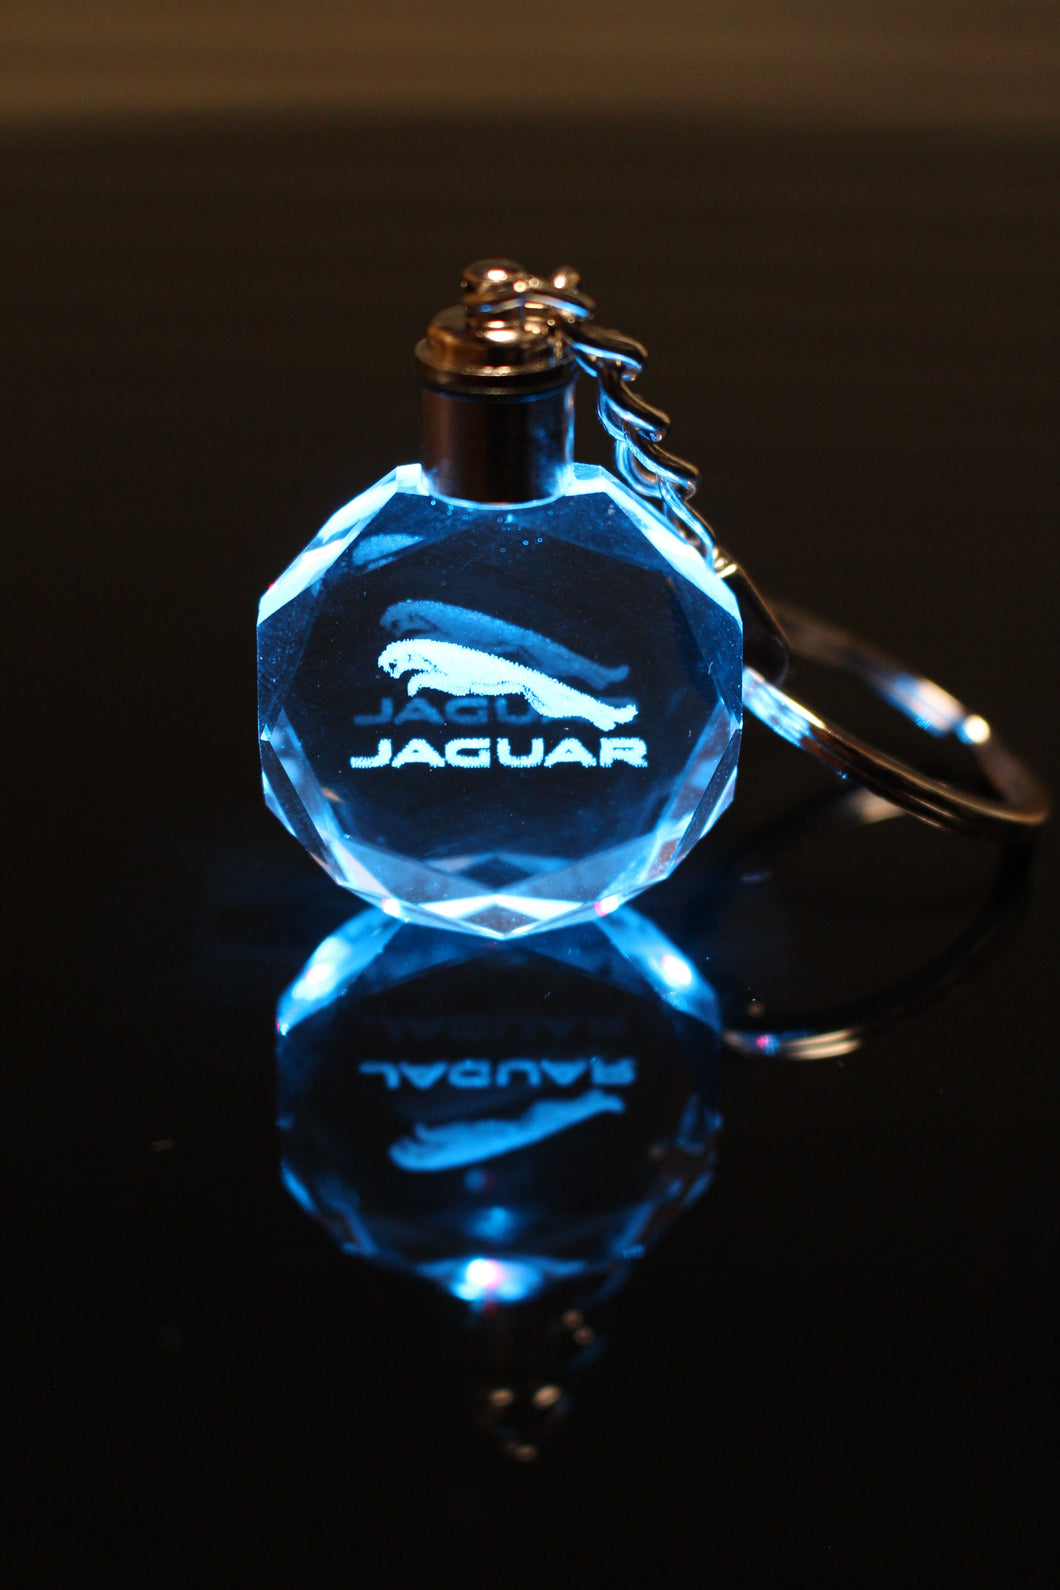 Jaguar LED Crystal Keychain 😍 maximize that ride!